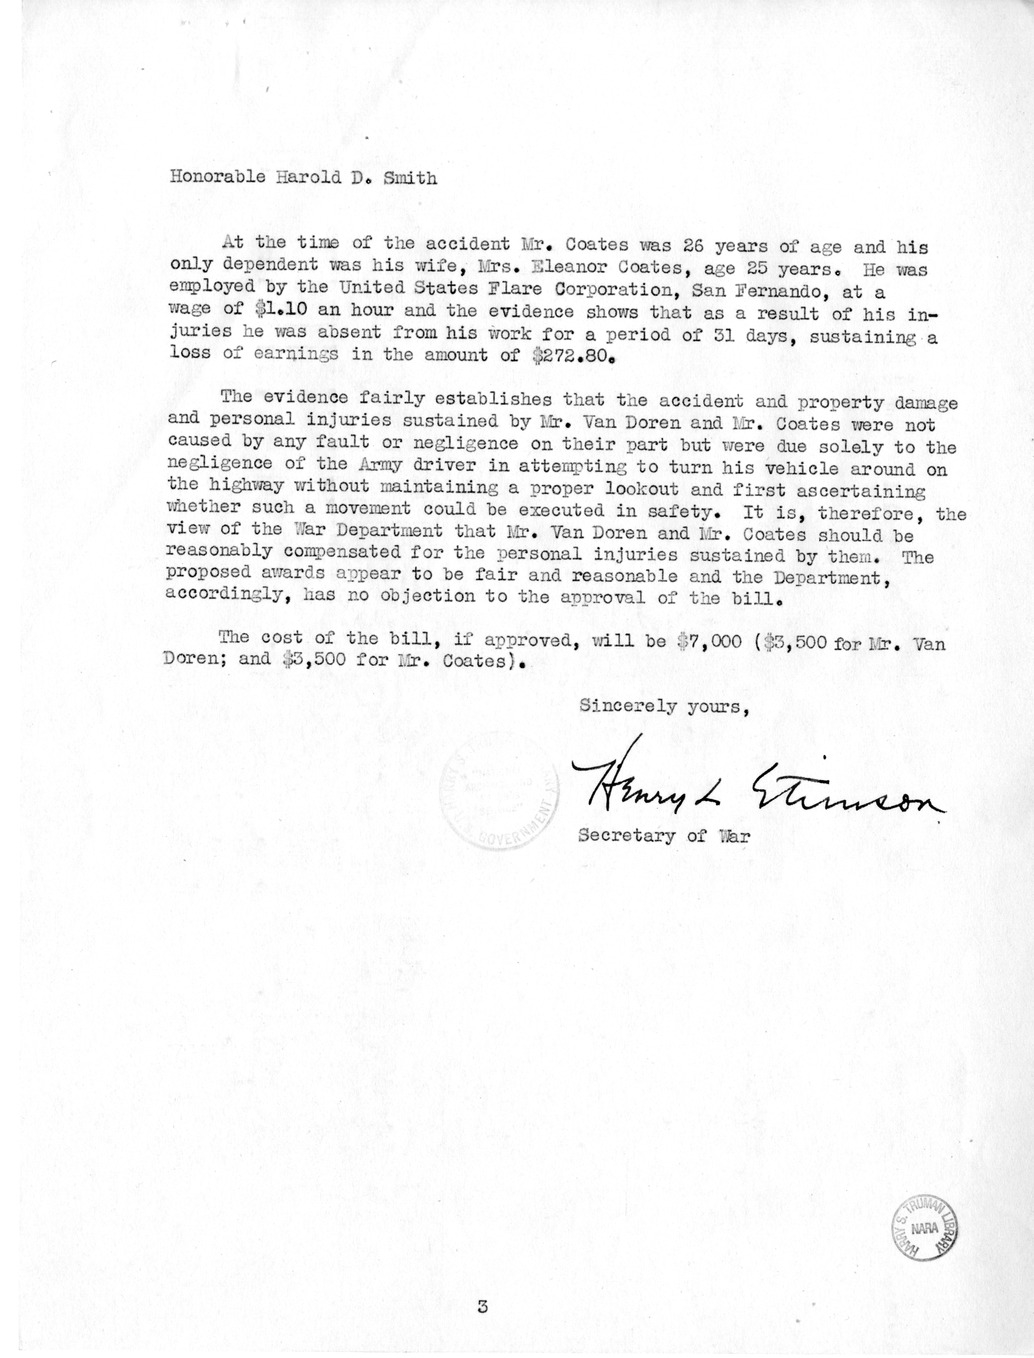 Memorandum from Frederick J. Bailey to M. C. Latta, S. 407, For the Relief of Pierce William Van Doren and Elmer J. Coates, with Attachments